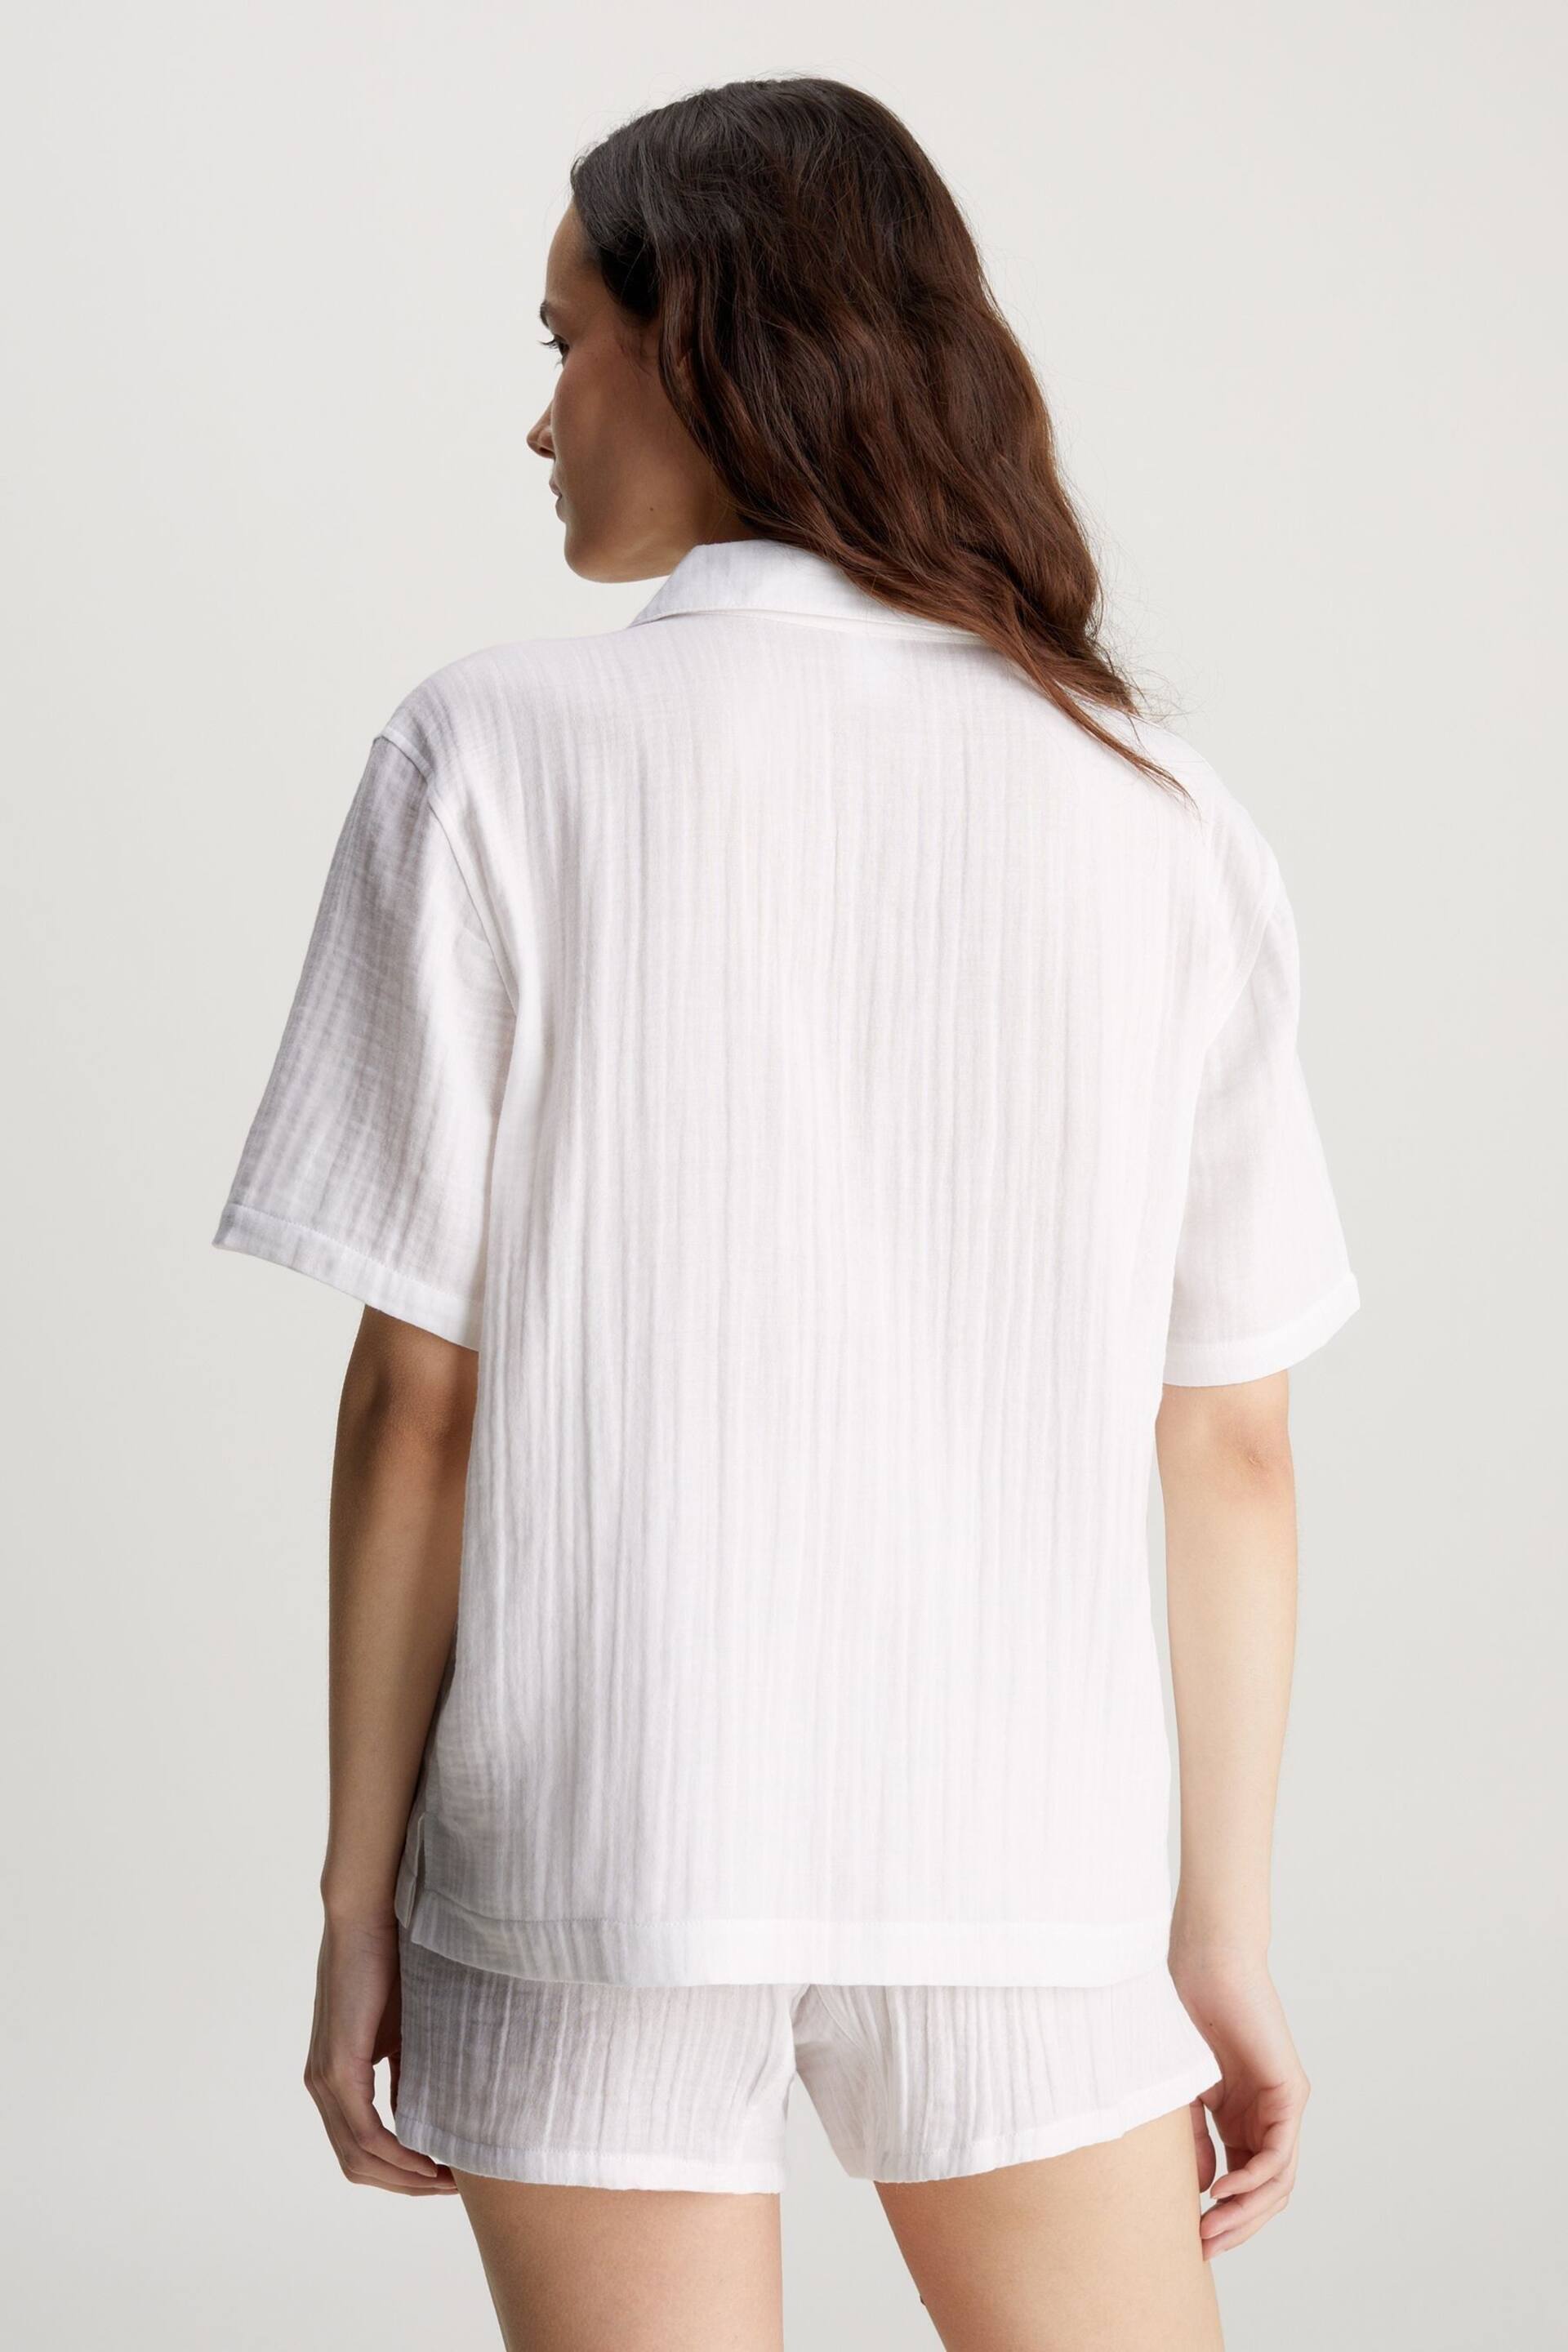 Calvin Klein White Short Sleeve Button Down Shirt - Image 2 of 4